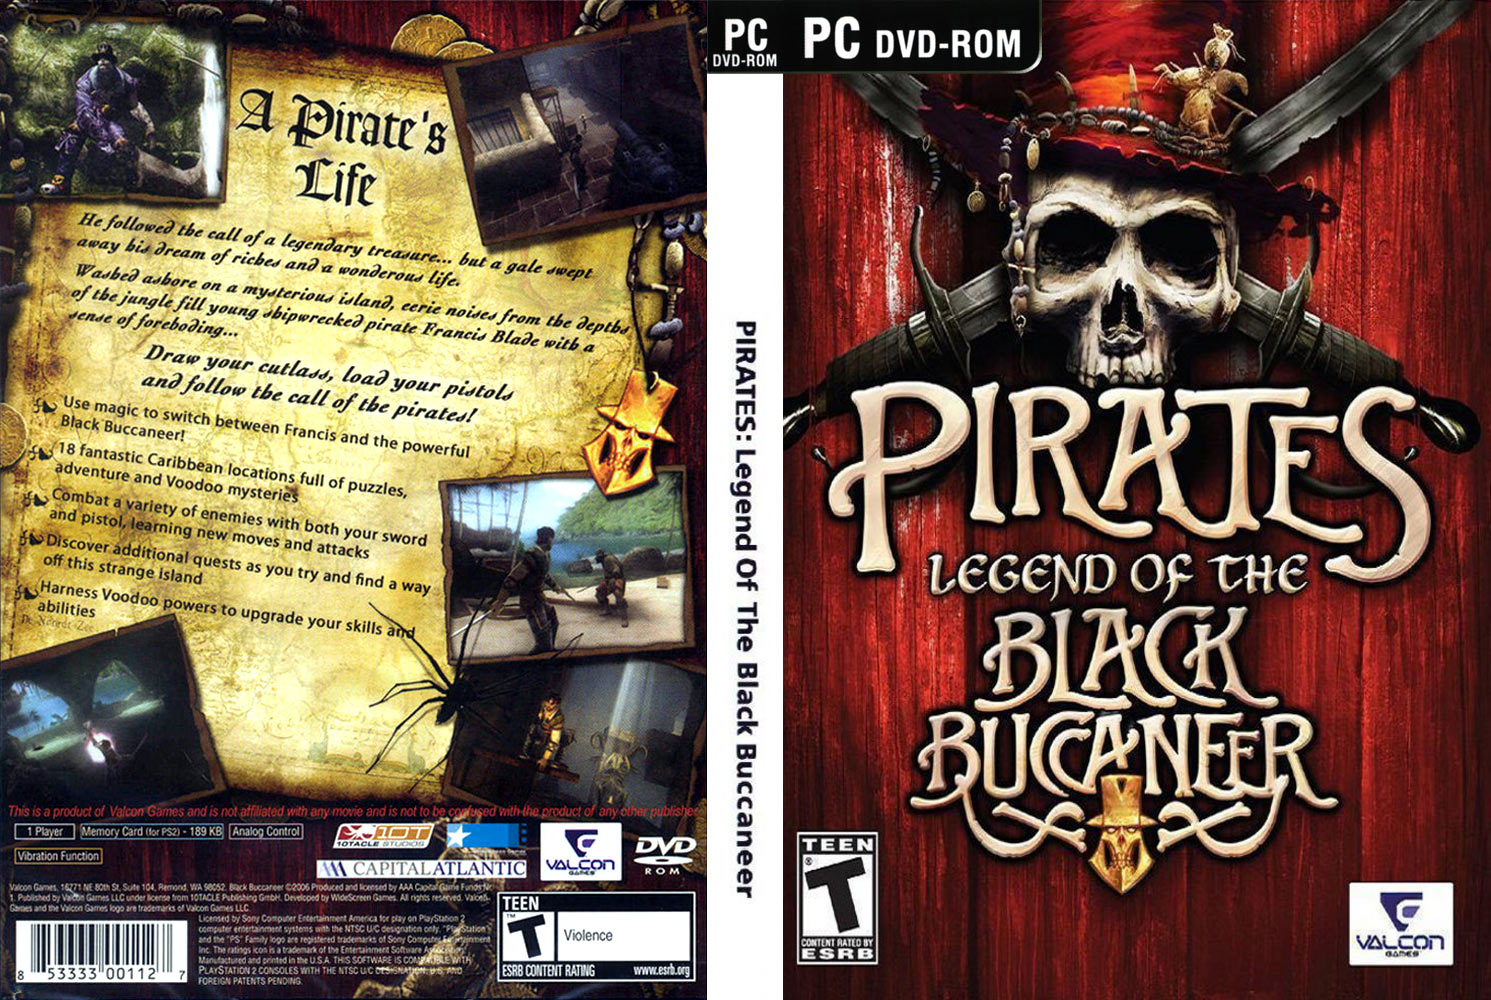 Black Buccaneer - DVD obal